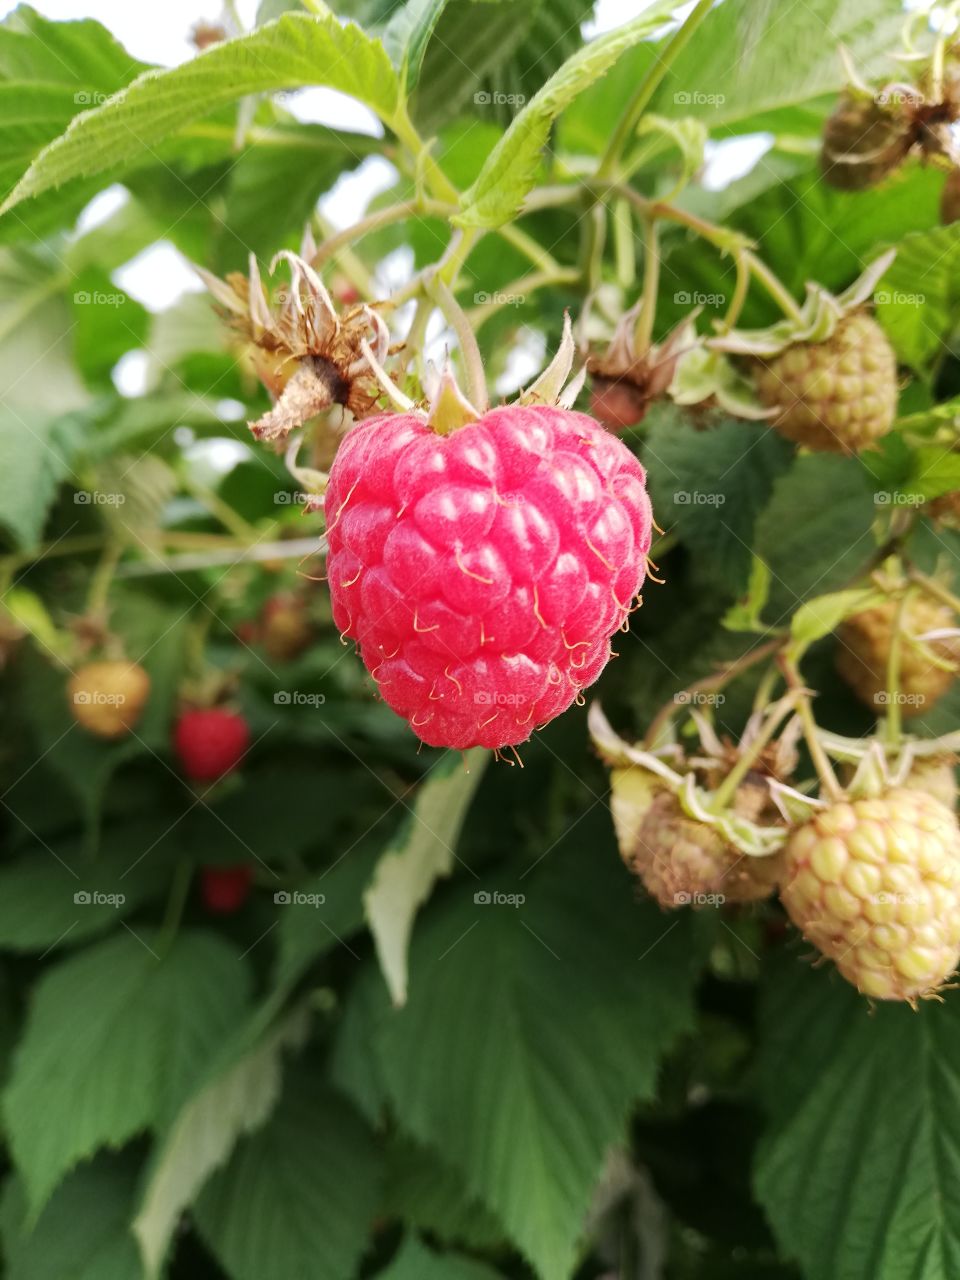 Delicious beautiful raspberry